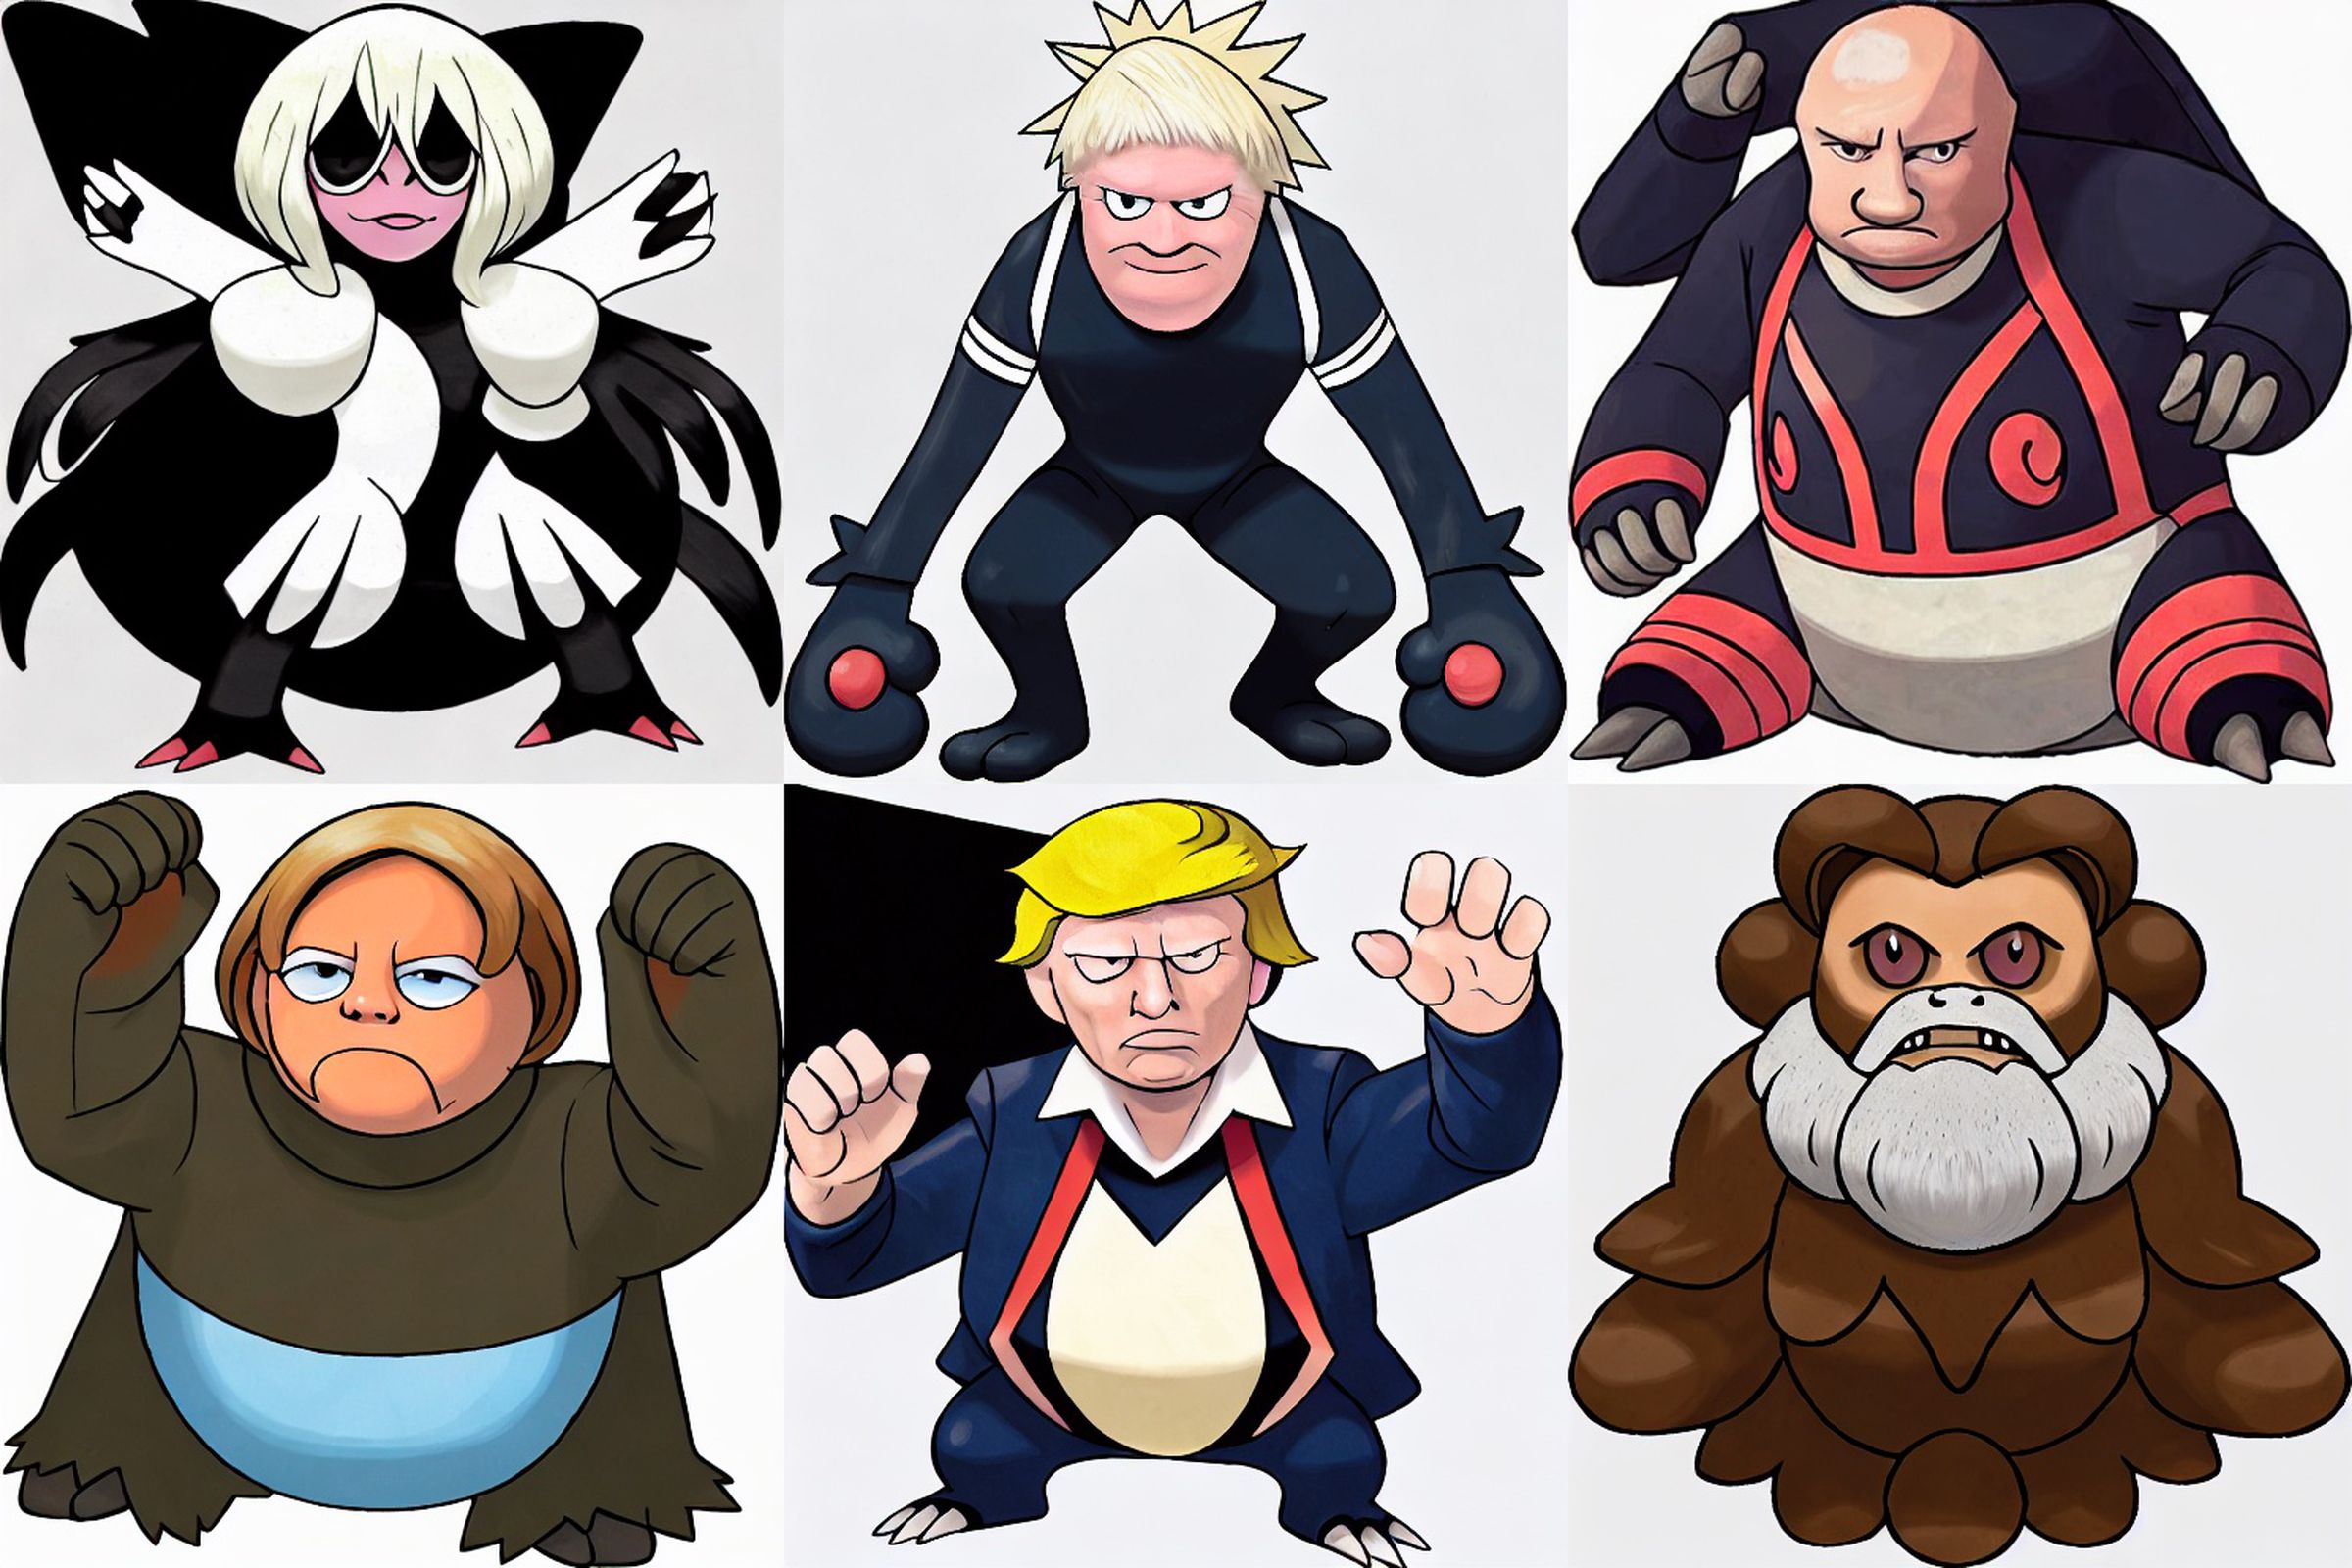 From left to right, top to bottom: Lady Gaga, Boris Johnson, Vladimir Putin, Angela Merkel, Donald Trump, Plato. 